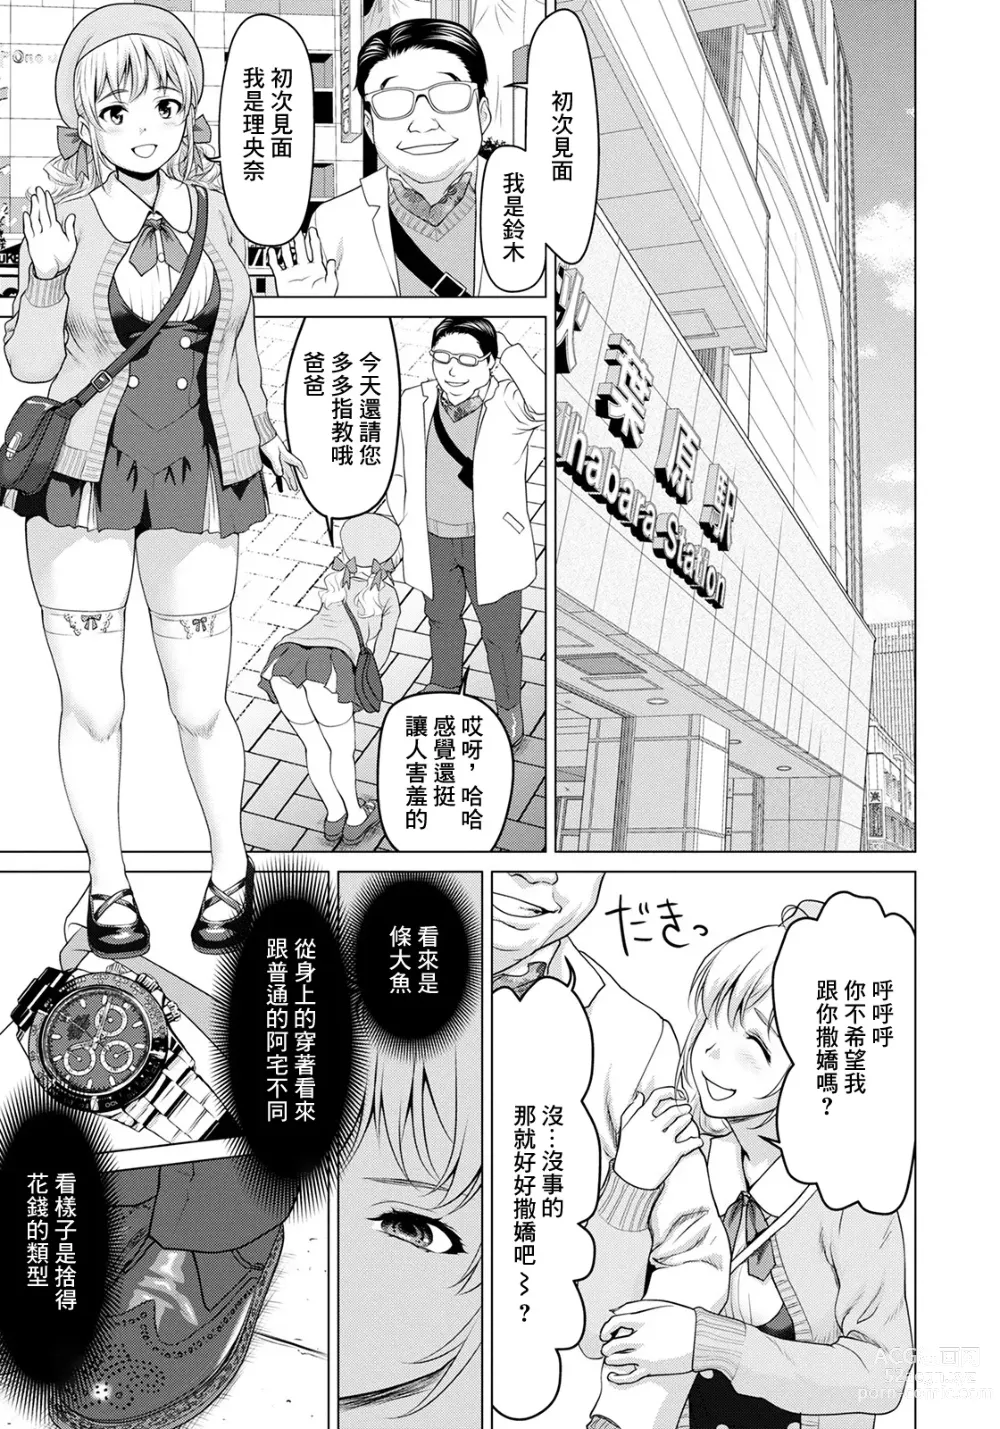 Page 5 of manga Papakatsu no Hime